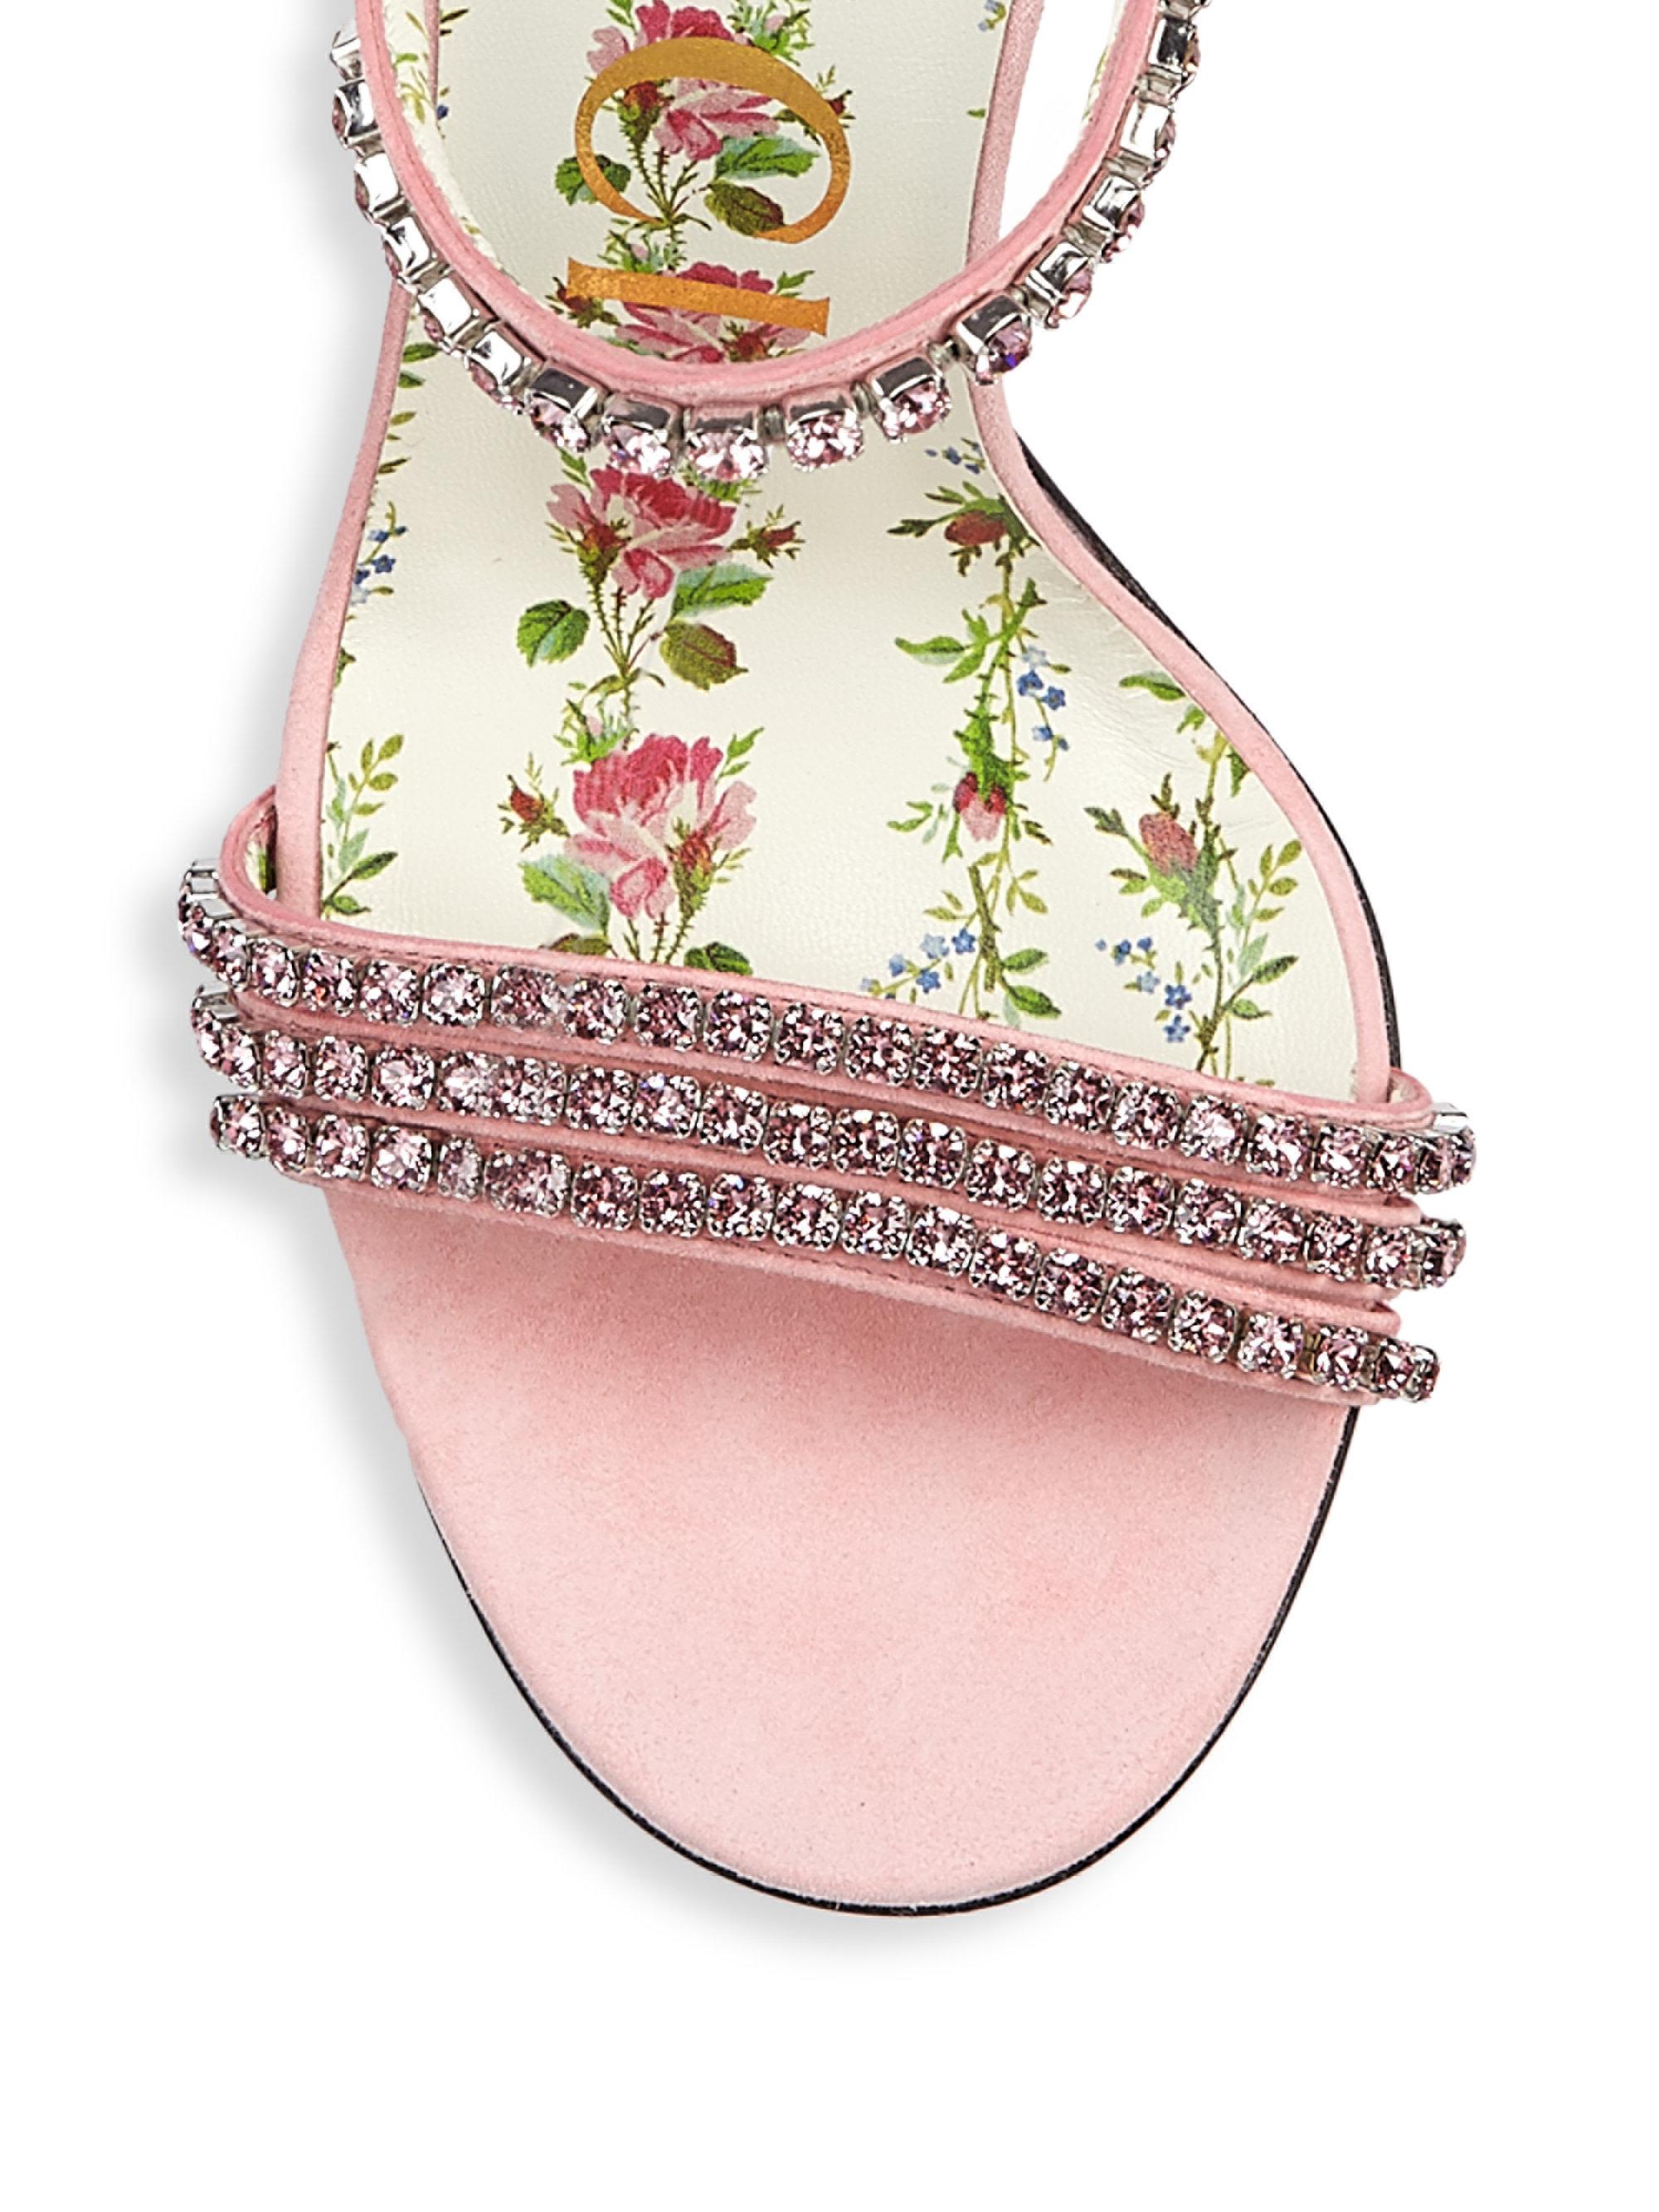 gucci isle jeweled sandals